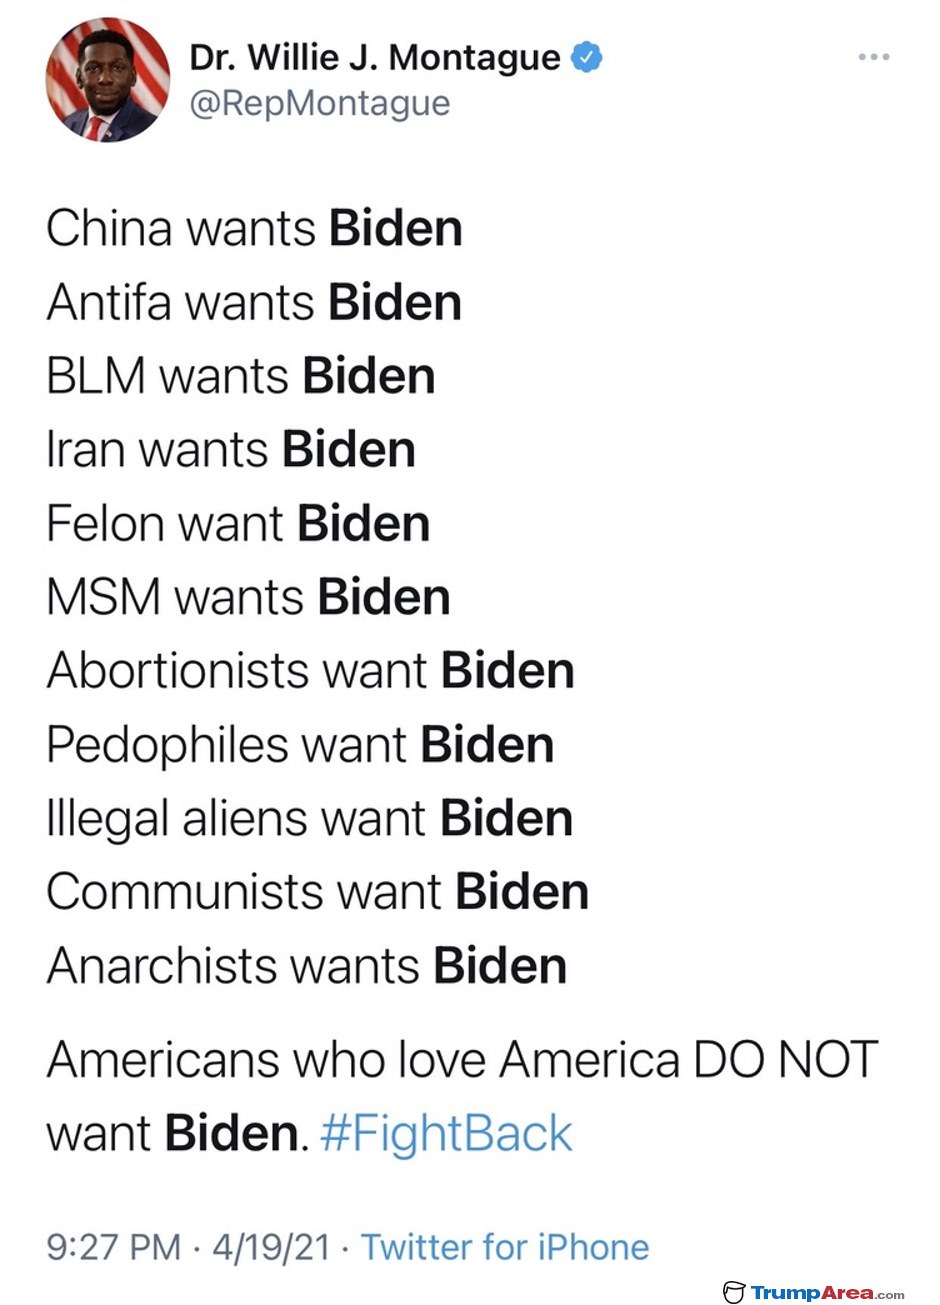 Who Wants Biden